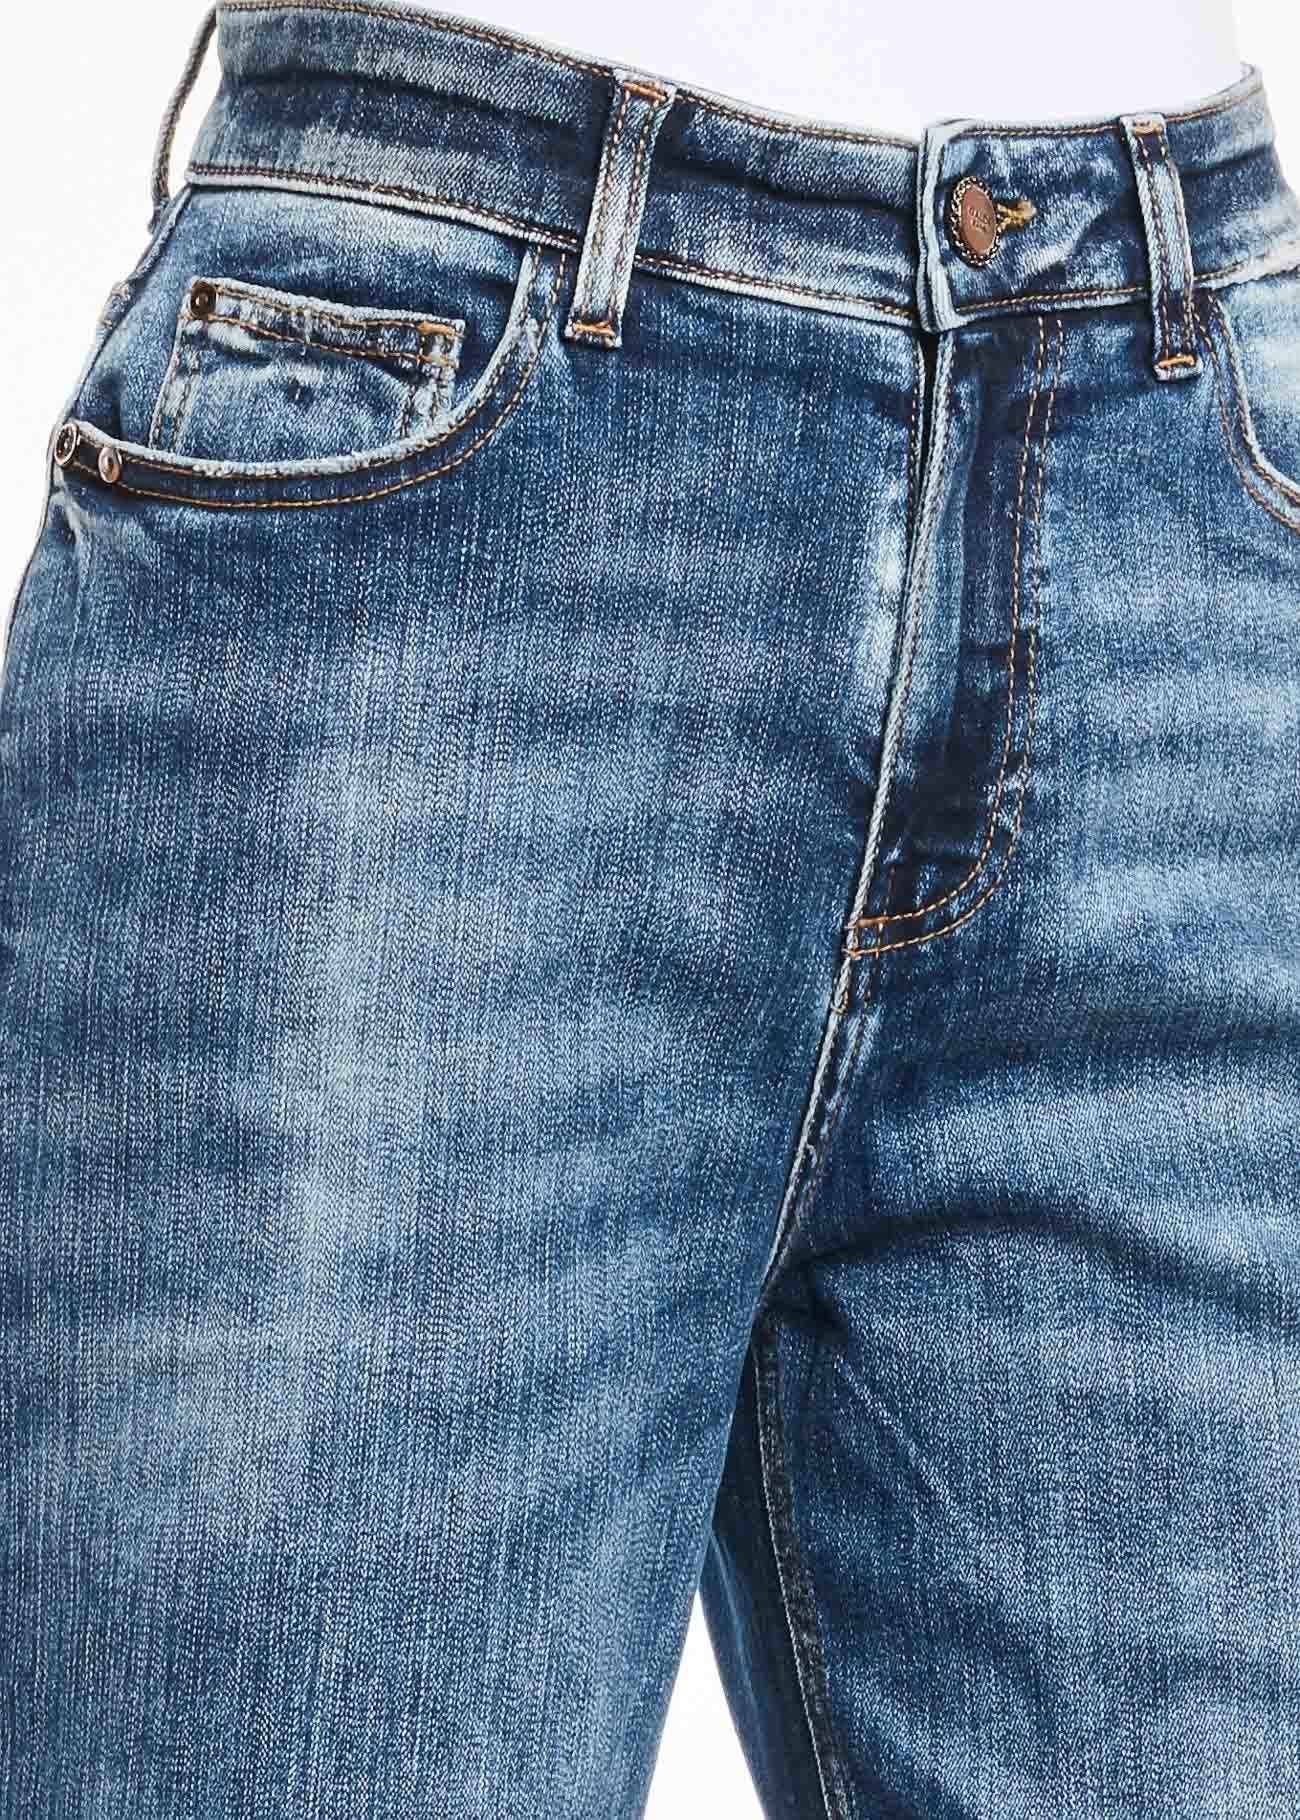 Worn-effect jeans